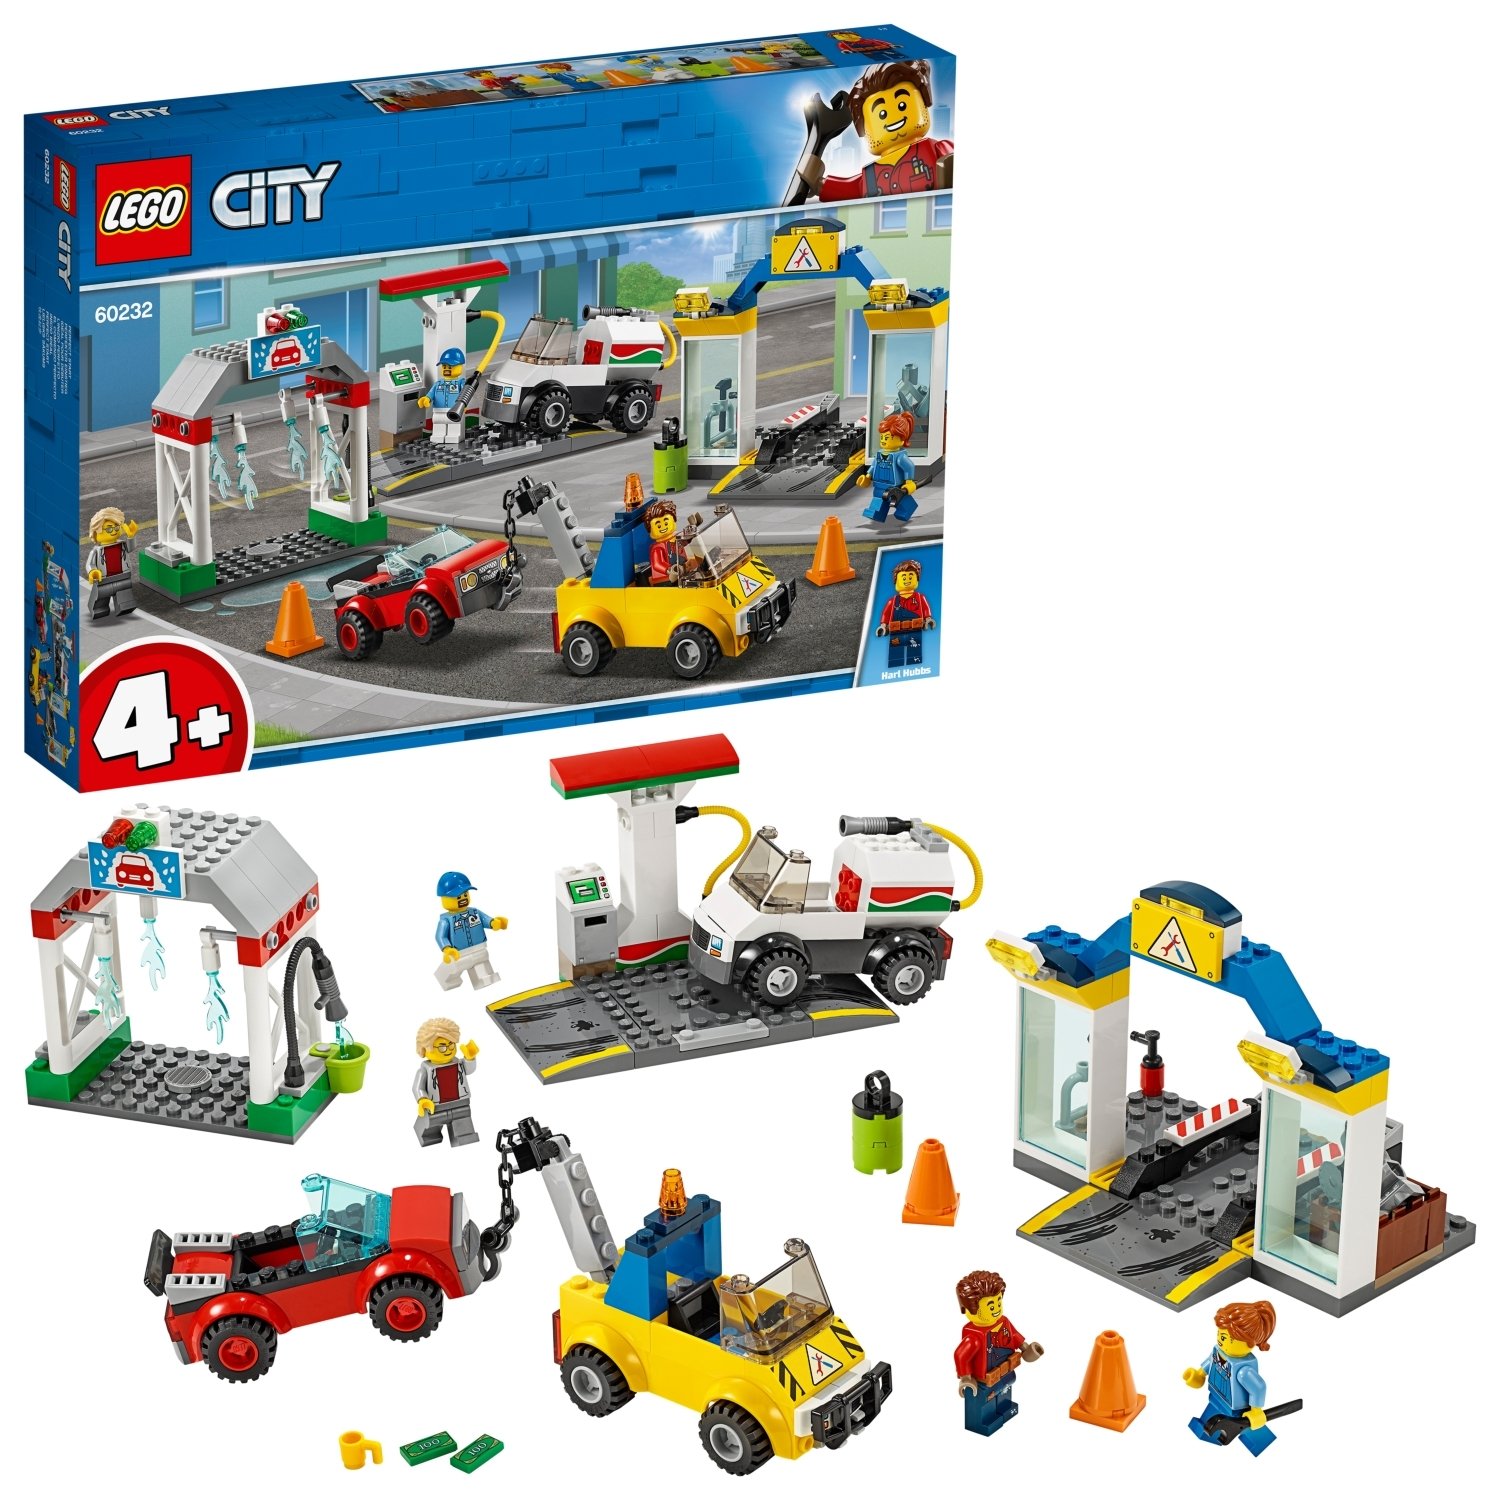 LEGO City Garage Center Playset - 60232